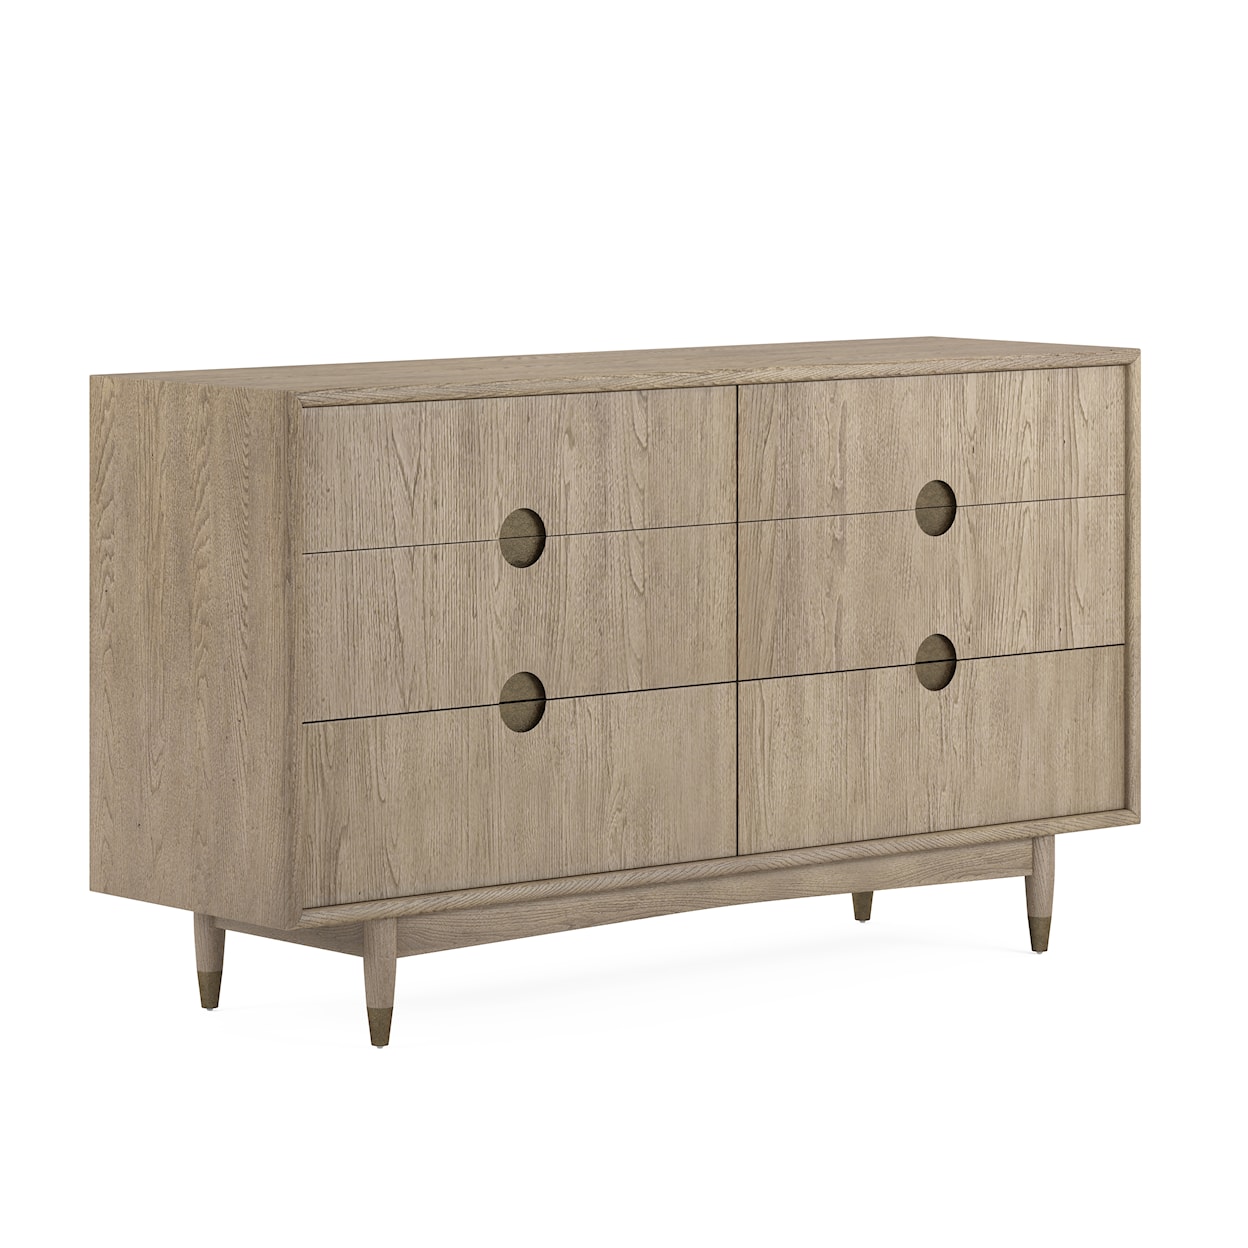 A.R.T. Furniture Inc Finn 6 Drawer Dresser